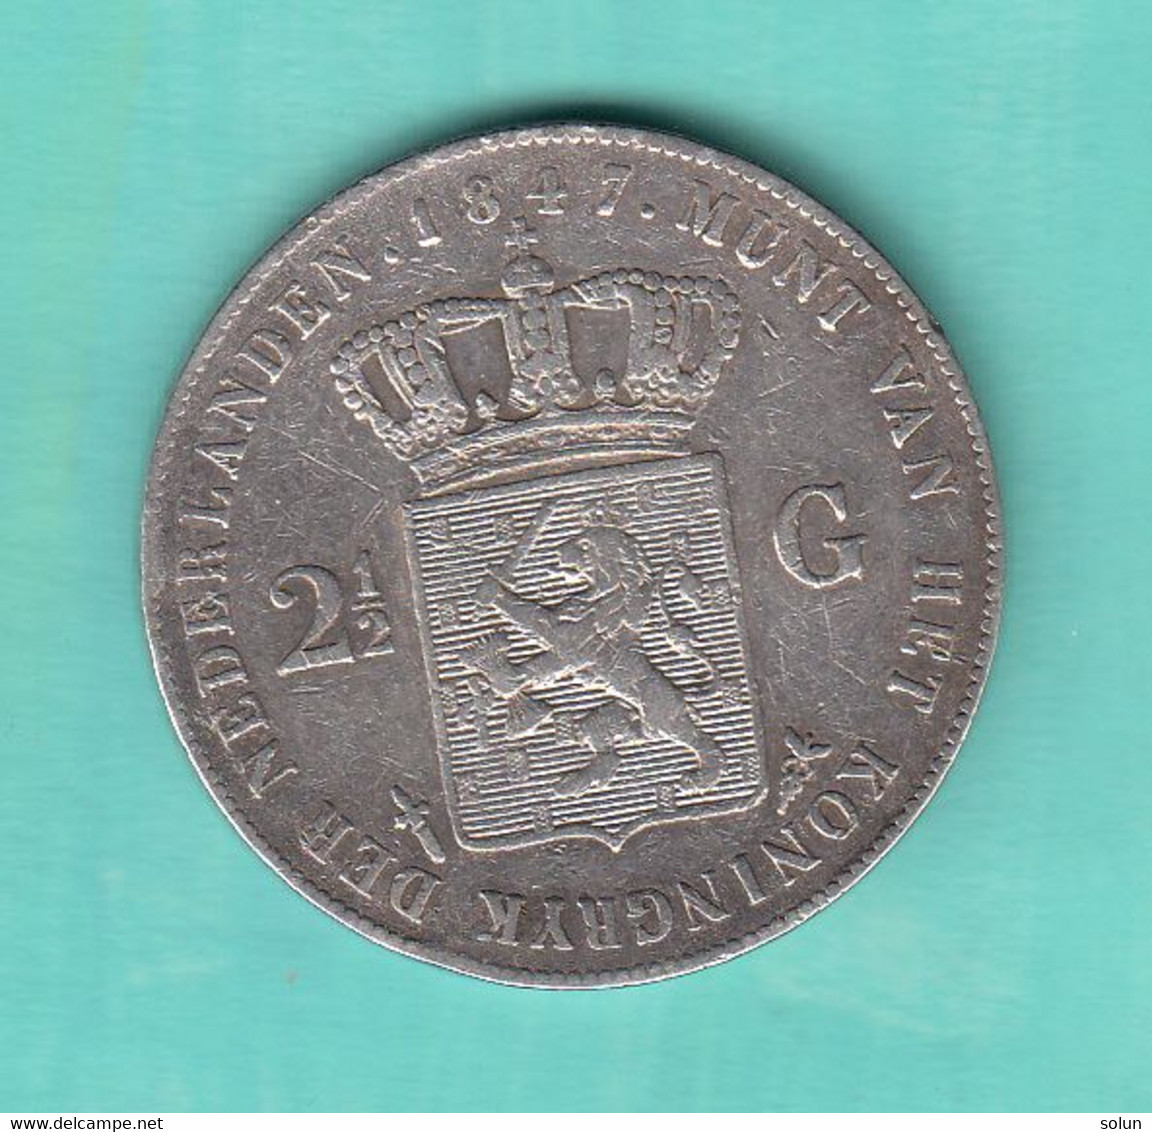 NETHERLANDS 2 1/2 GULDEN 1847 SILVER COIN WILLEM II KONING - 1840-1849 : Willem II